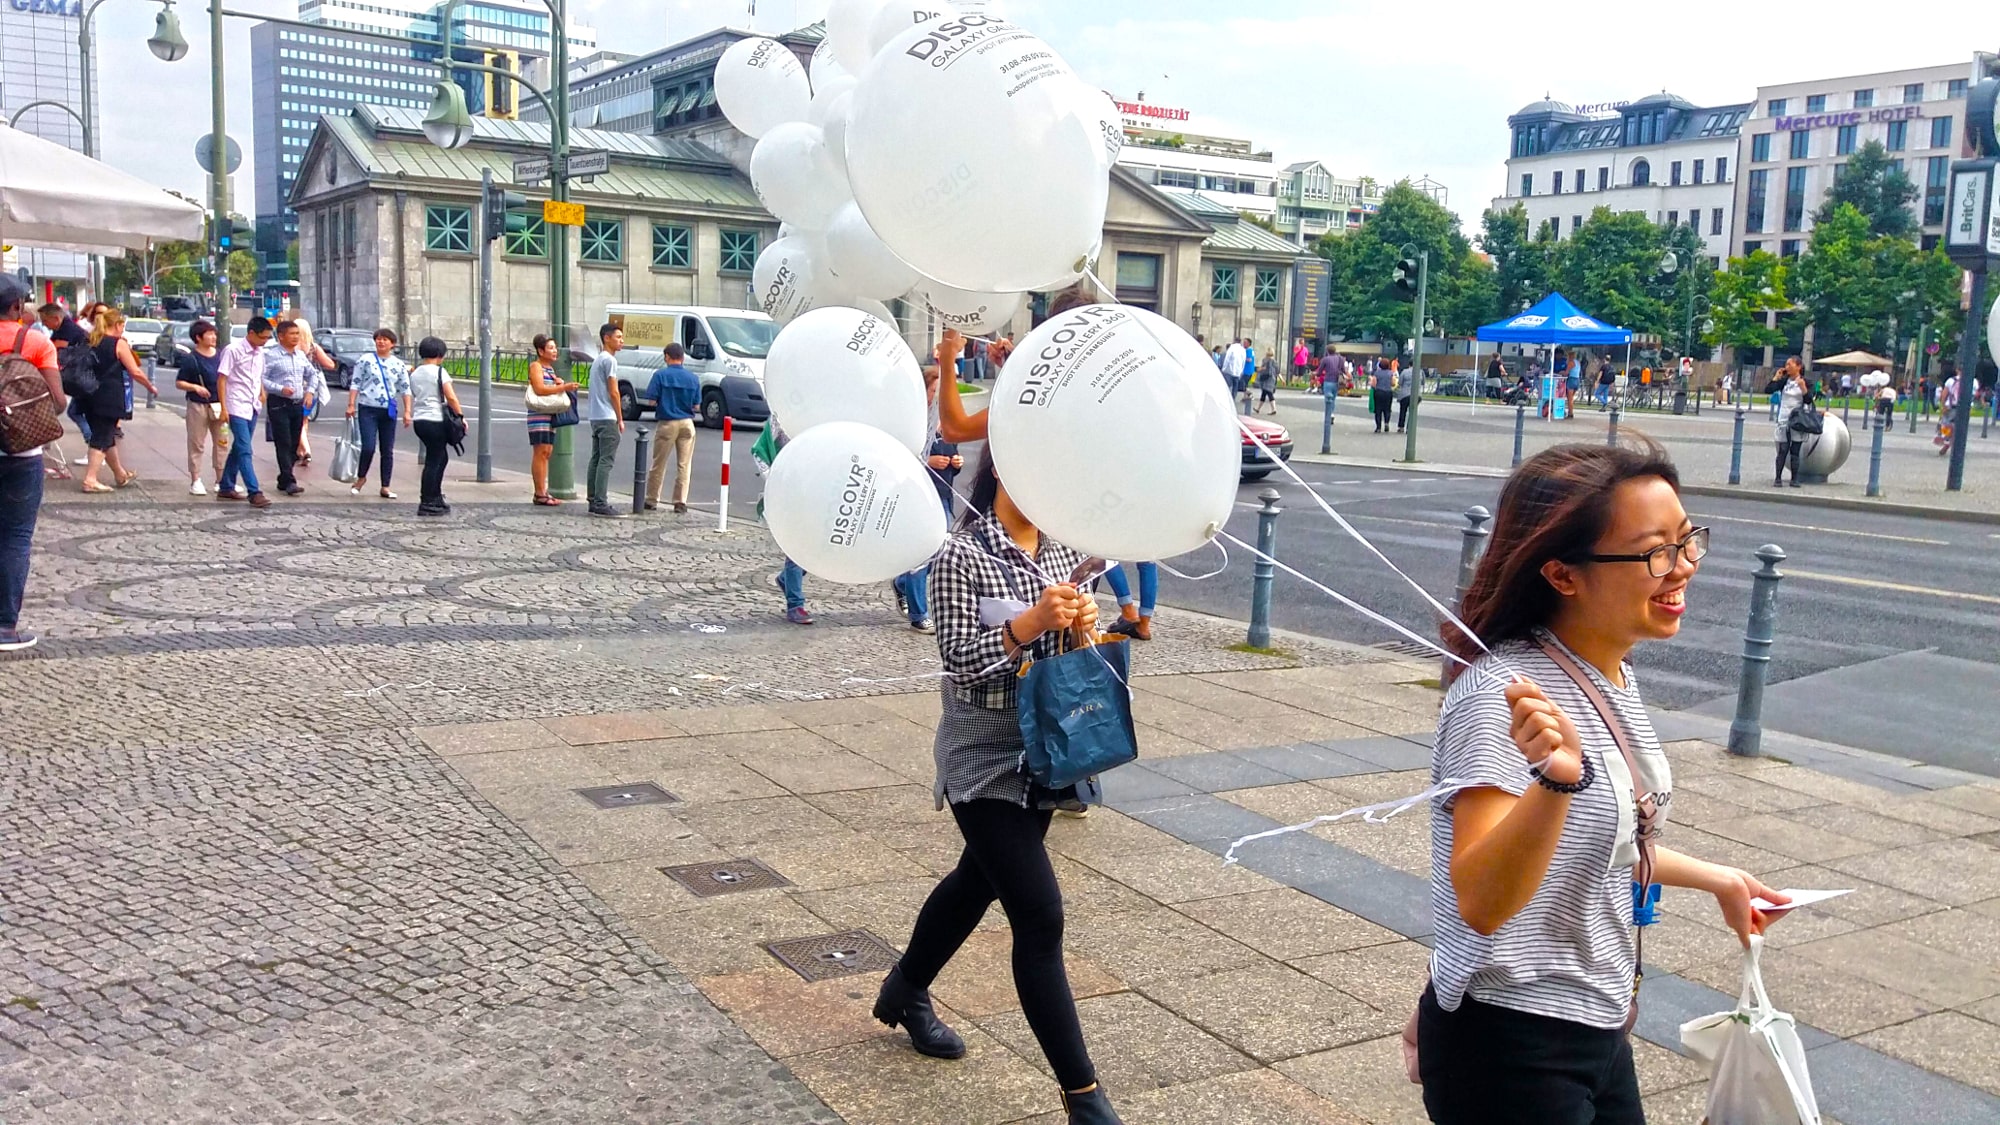 Promotion Idee - Werbung mit Luftballons